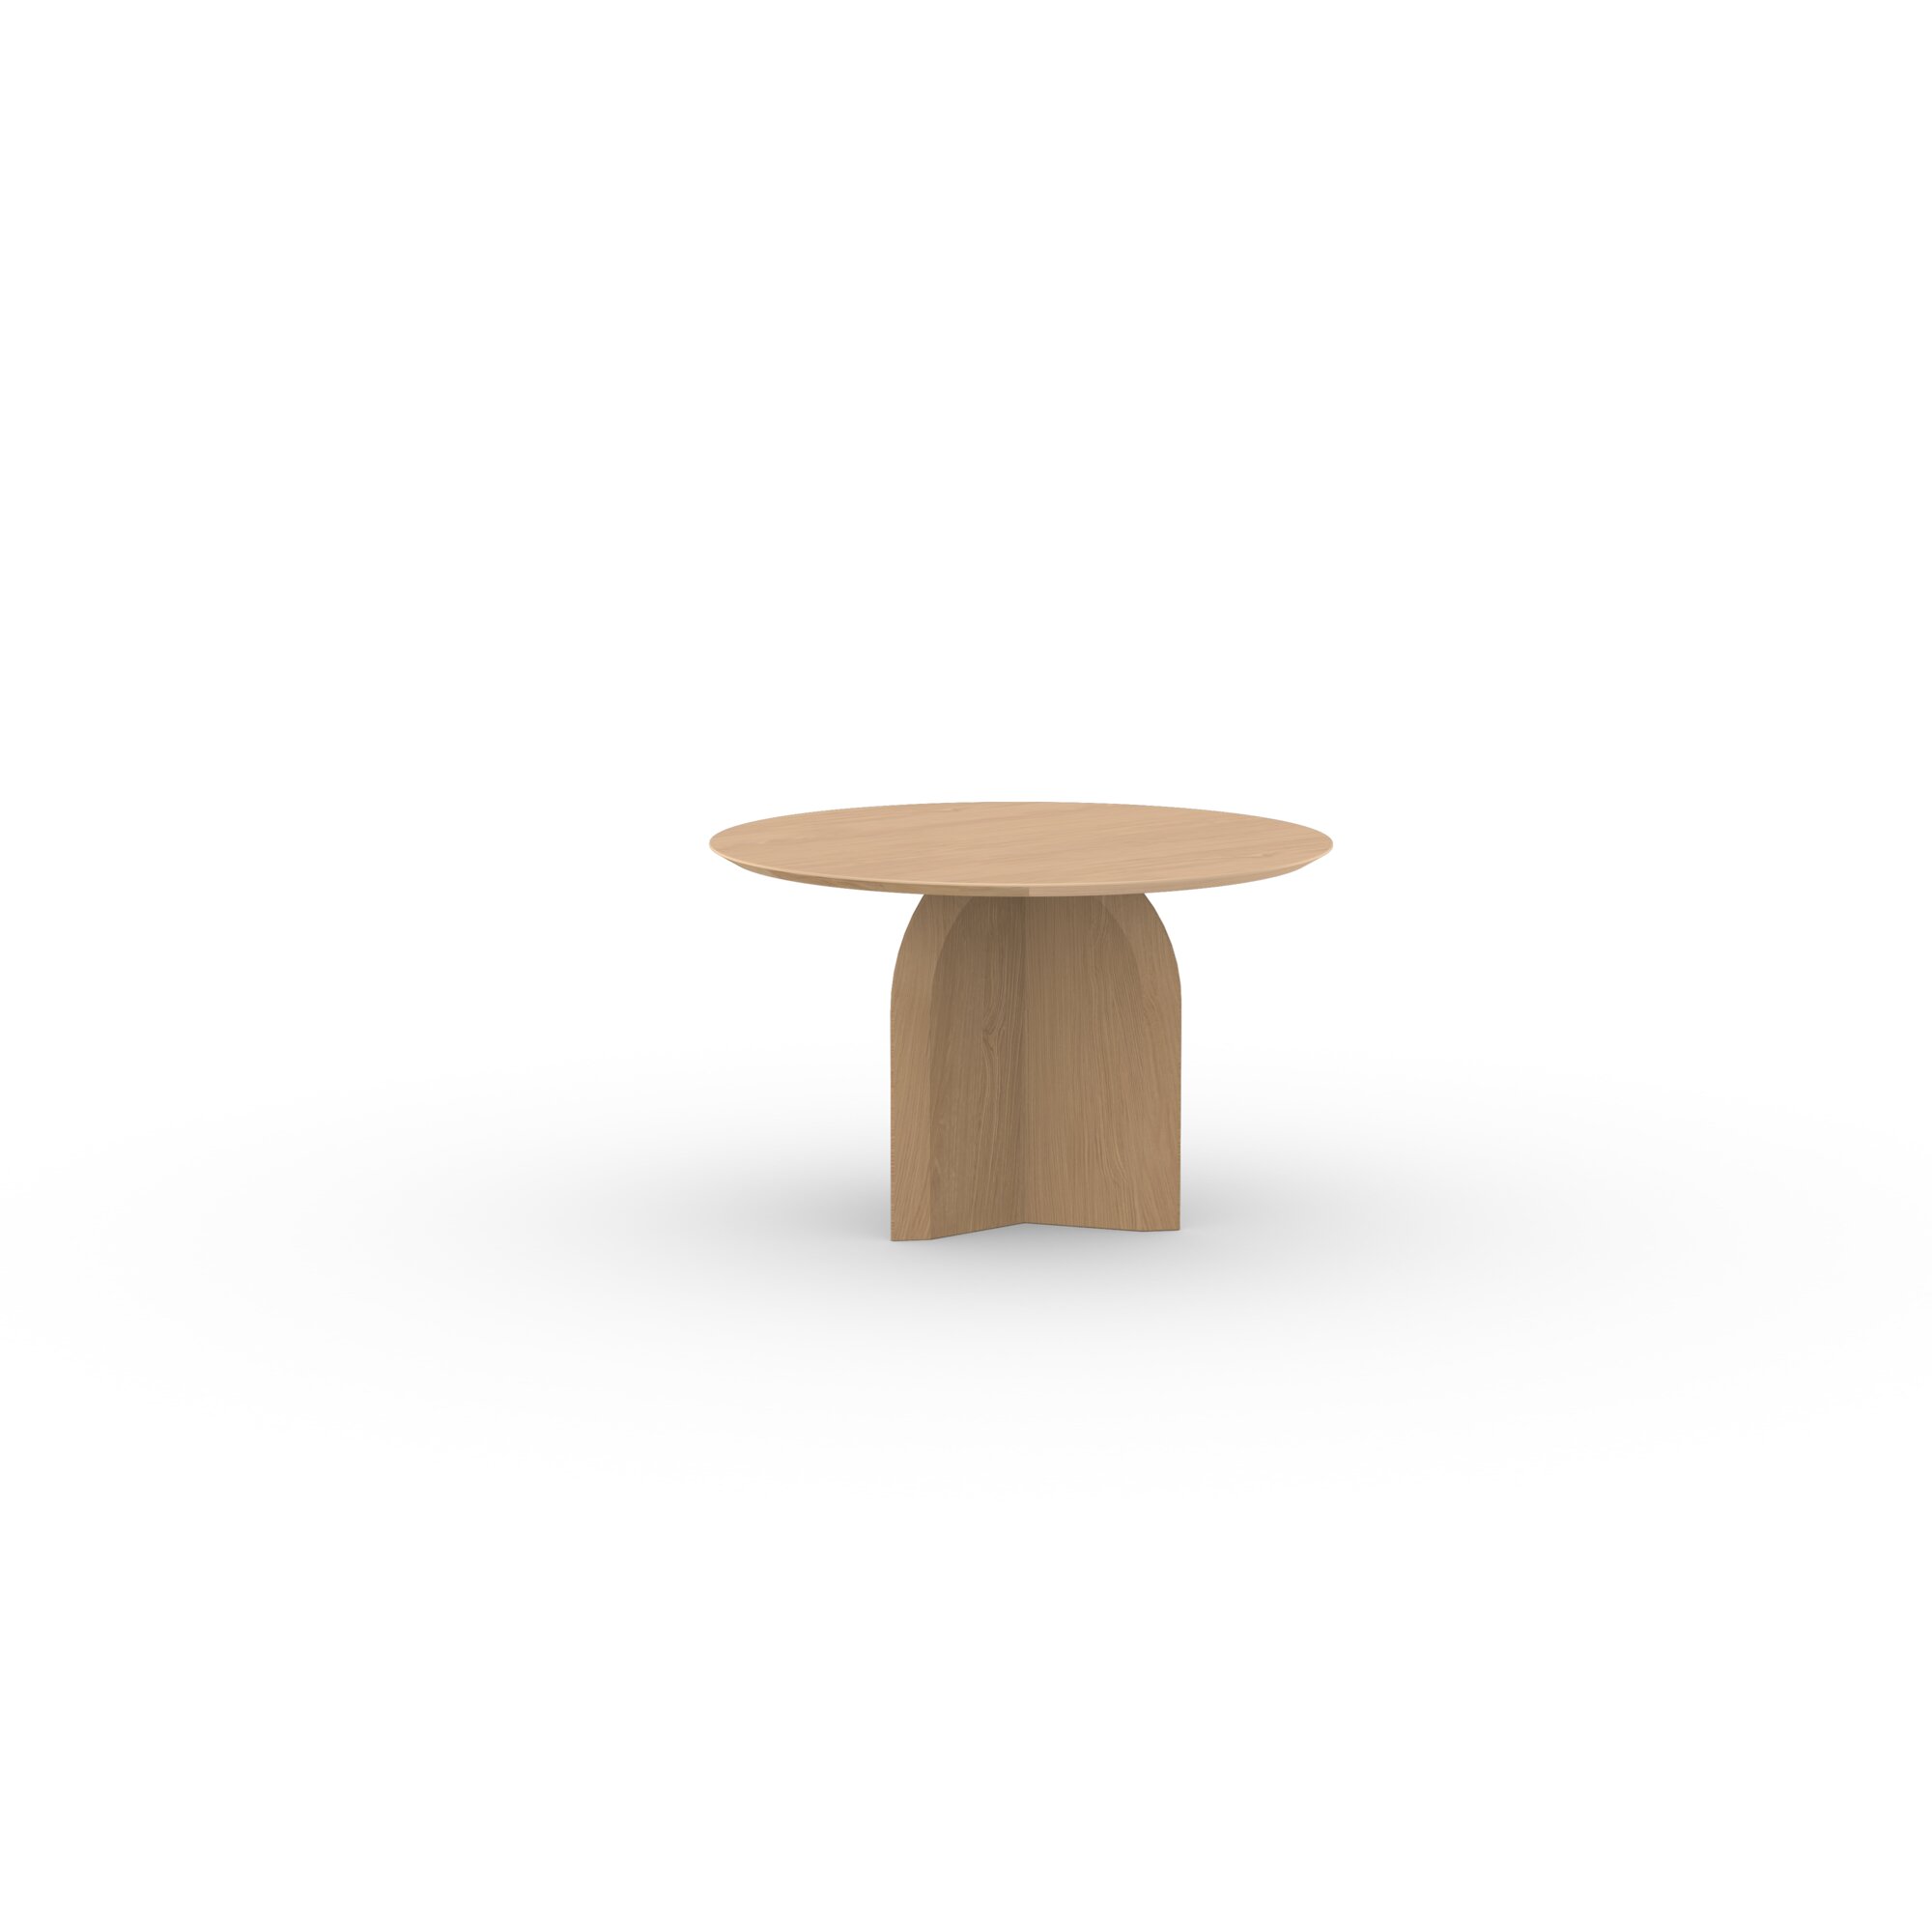 Ronde Design dining table | Slot Tripod Oak hardwax oil natural light | Oak hardwax oil natural light | Studio HENK| 